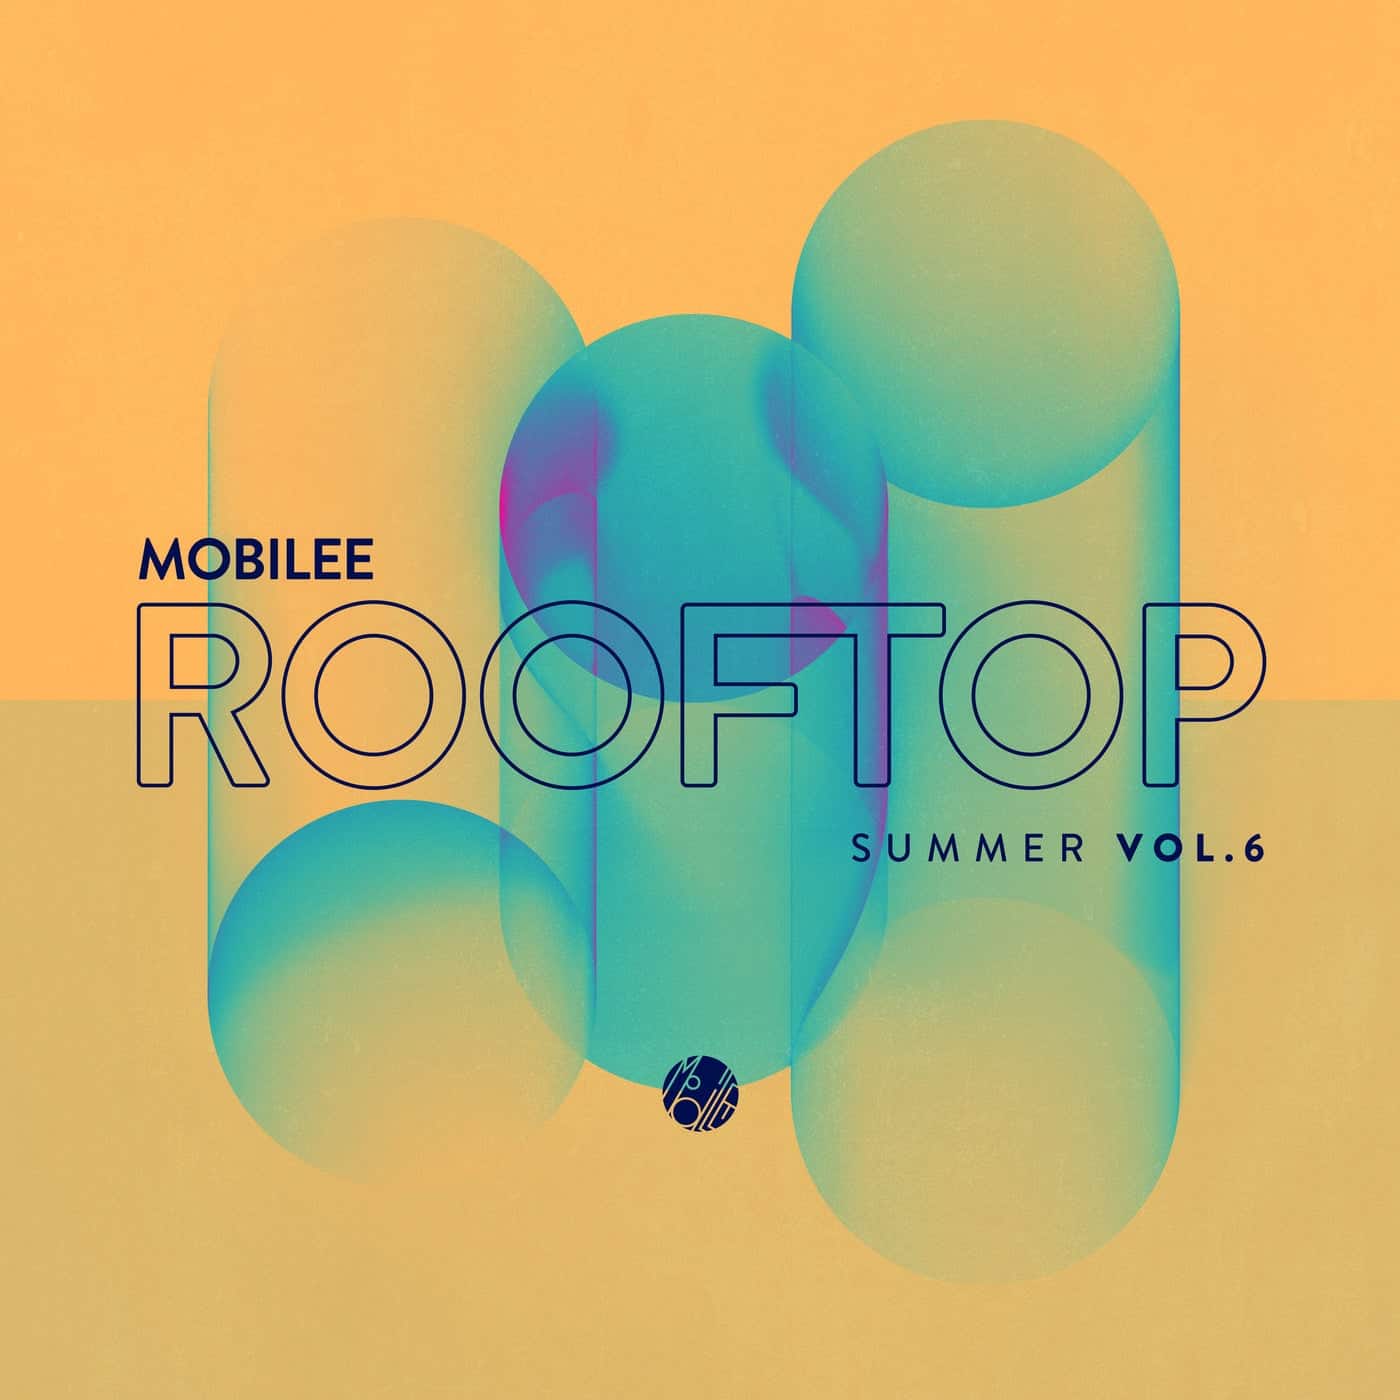 Download VA - Mobilee Rooftop Summer Vol. 6 on Electrobuzz